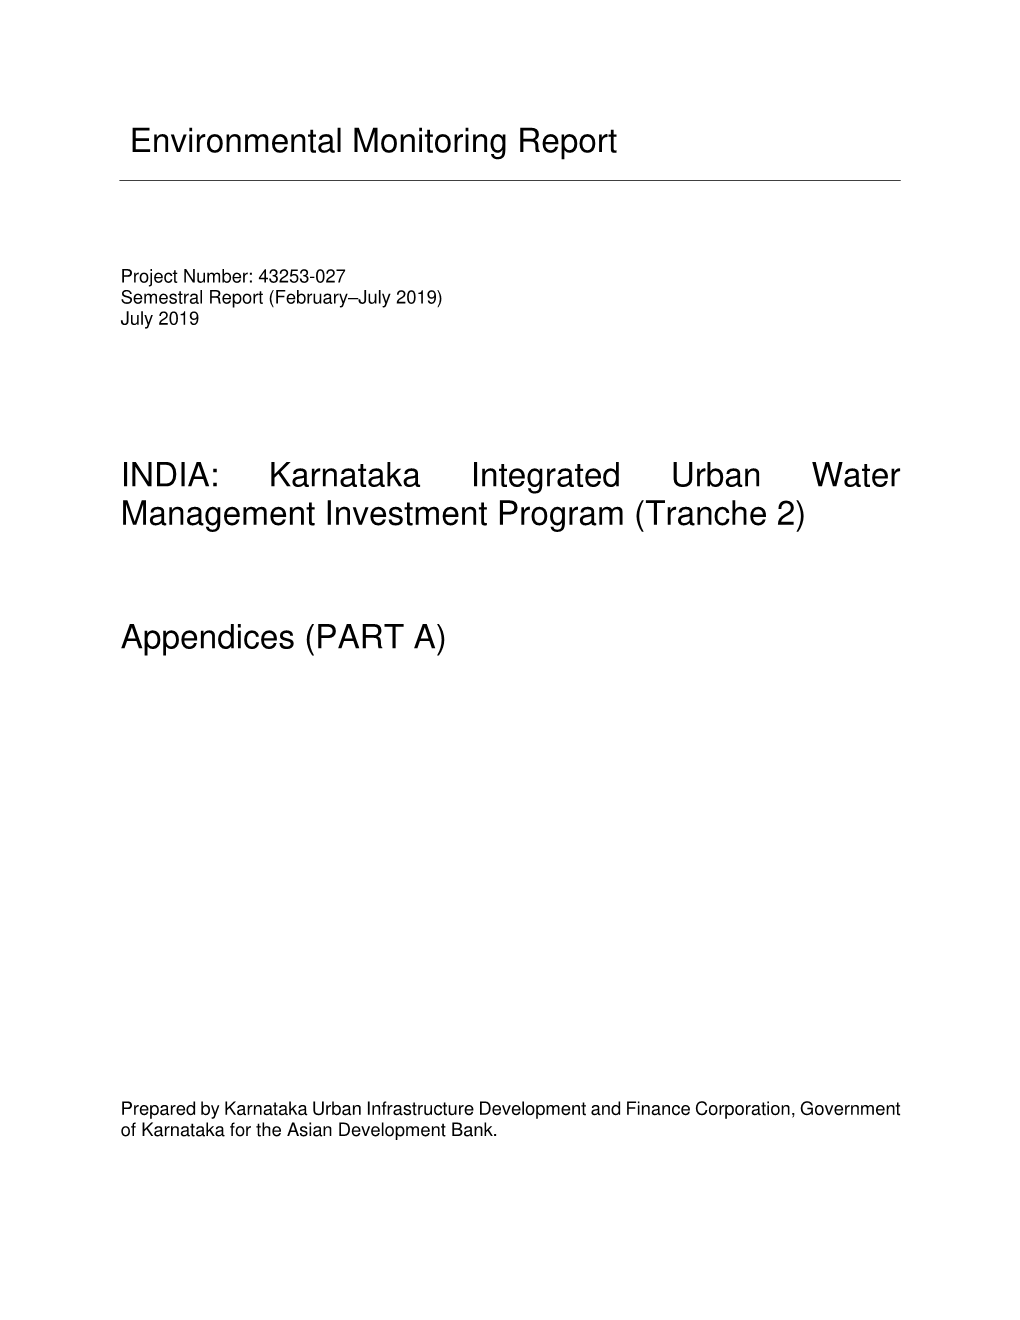 Karnataka Integrated Urban Water Management Investment Program (Tranche 2)